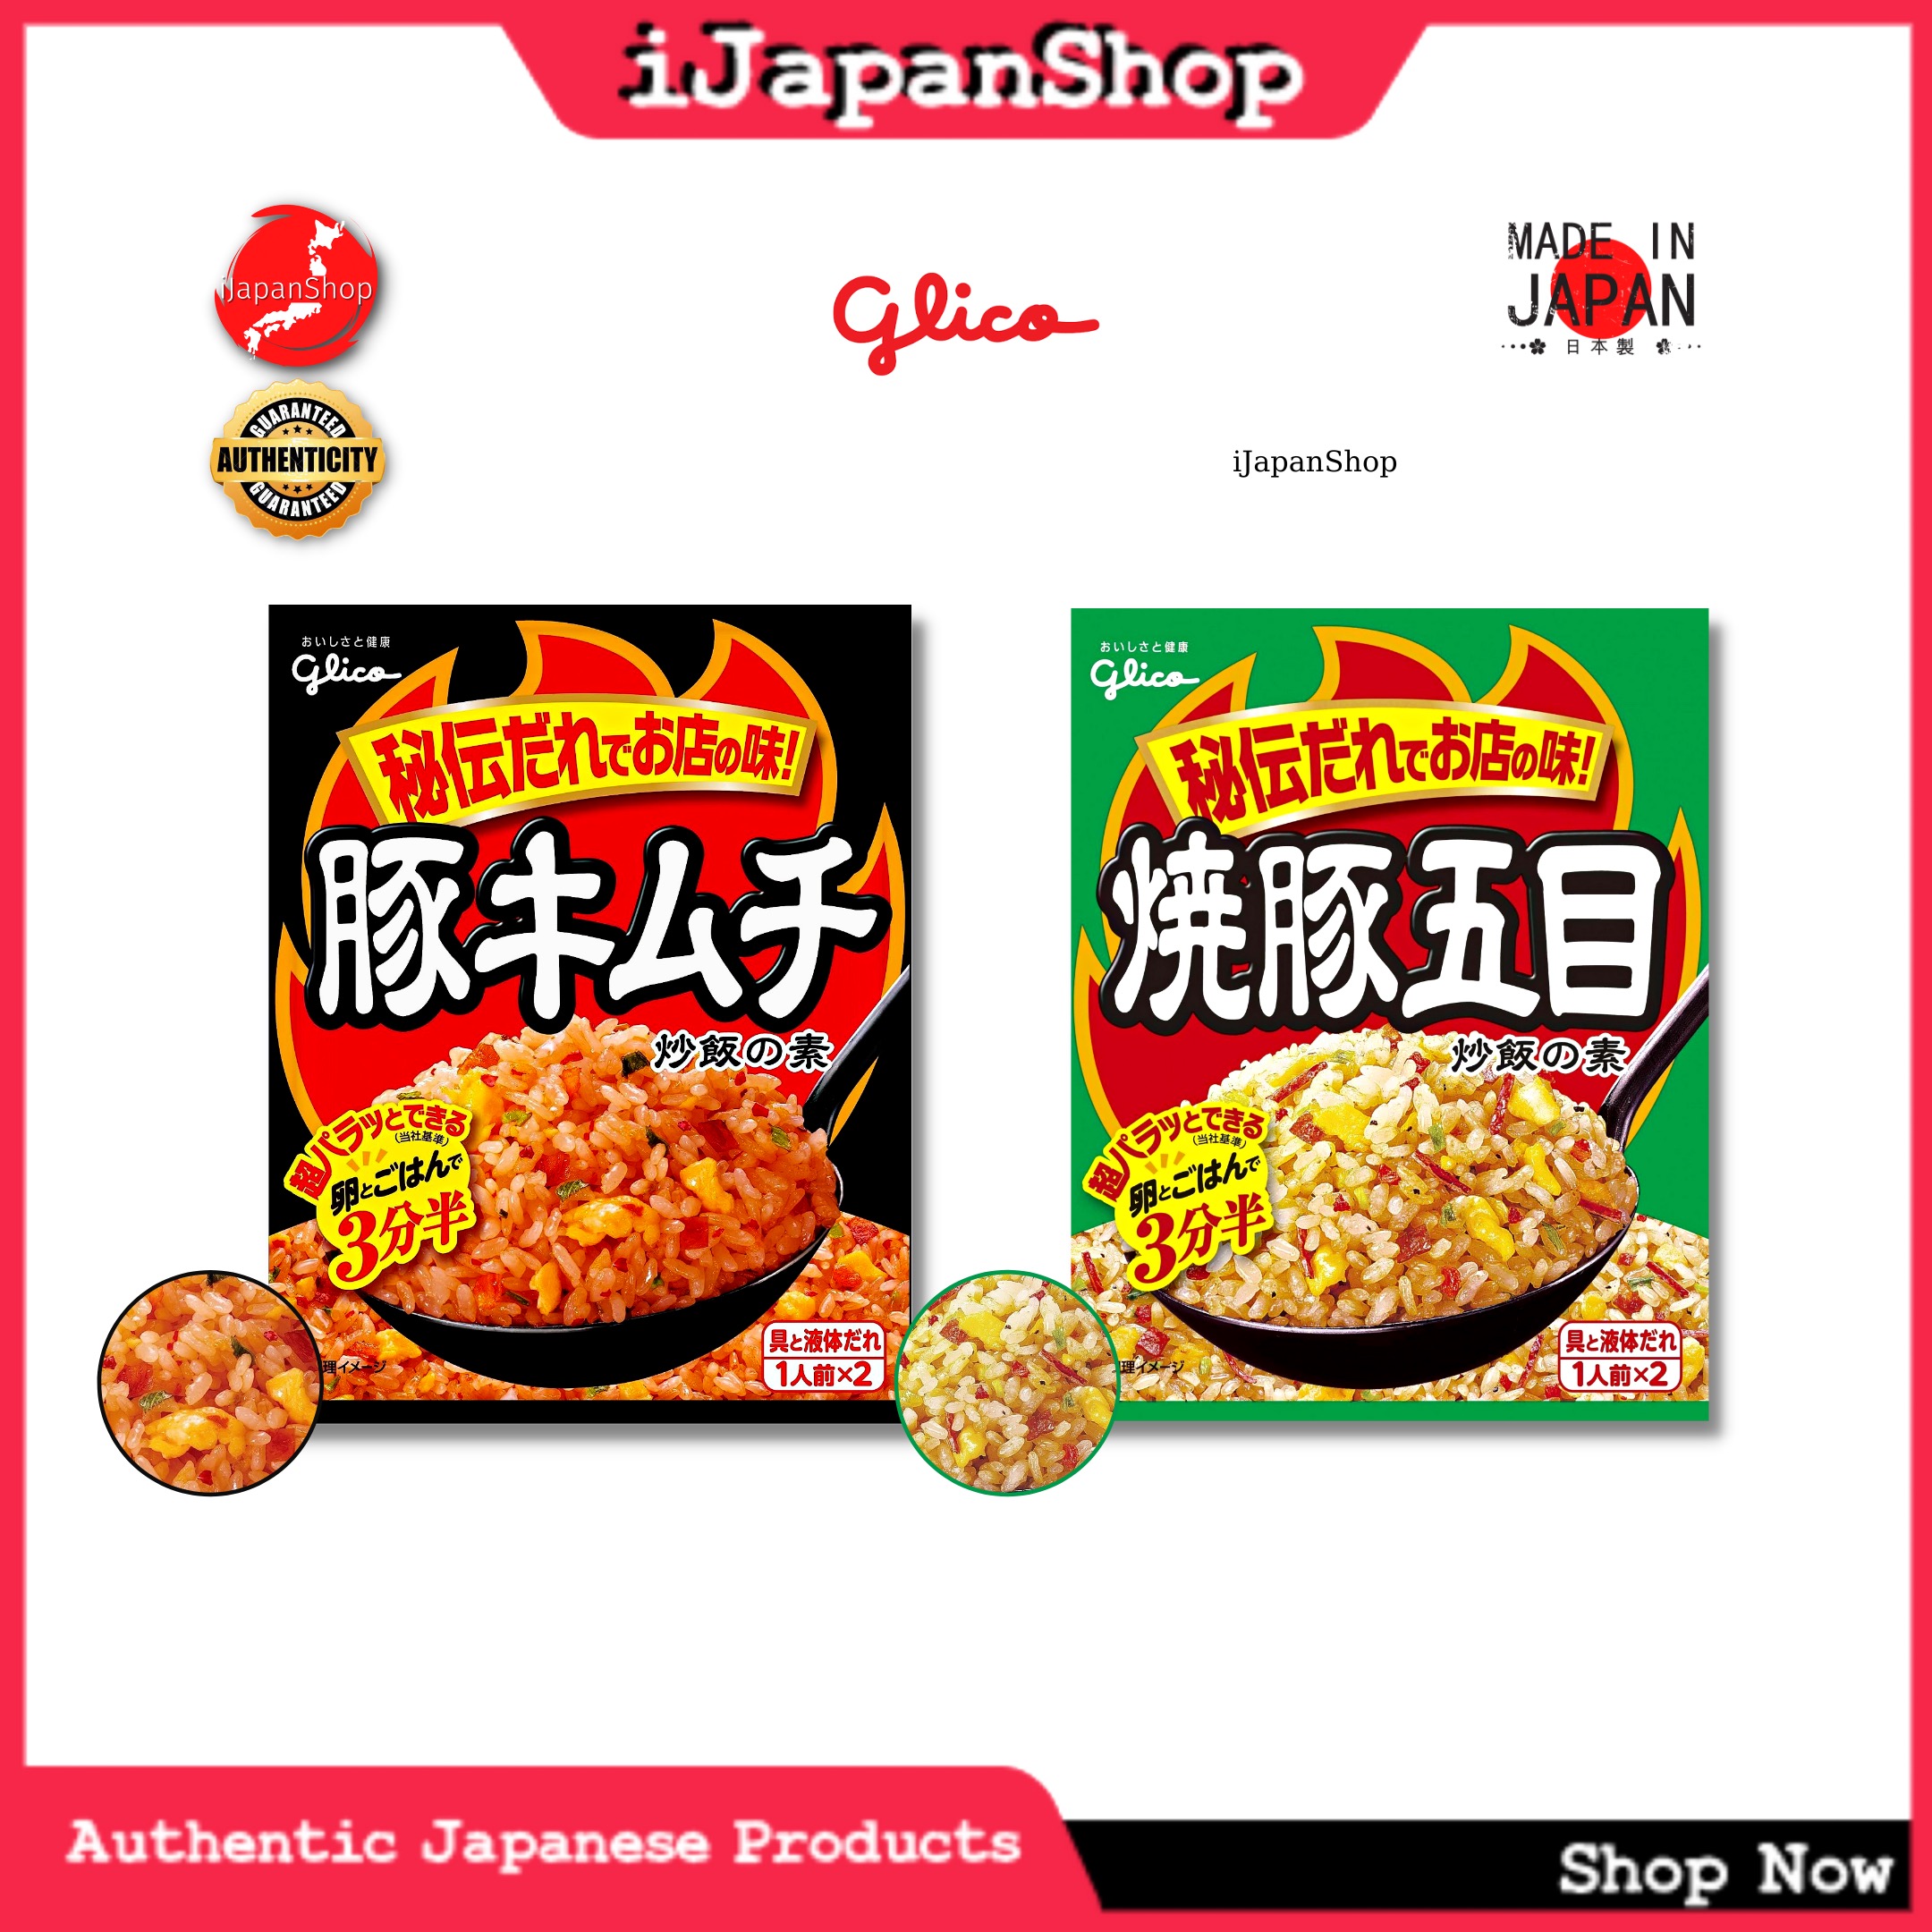 Nagatanien Chahan Mix Japanese Fried Rice Seasoning Pork 3 Servings